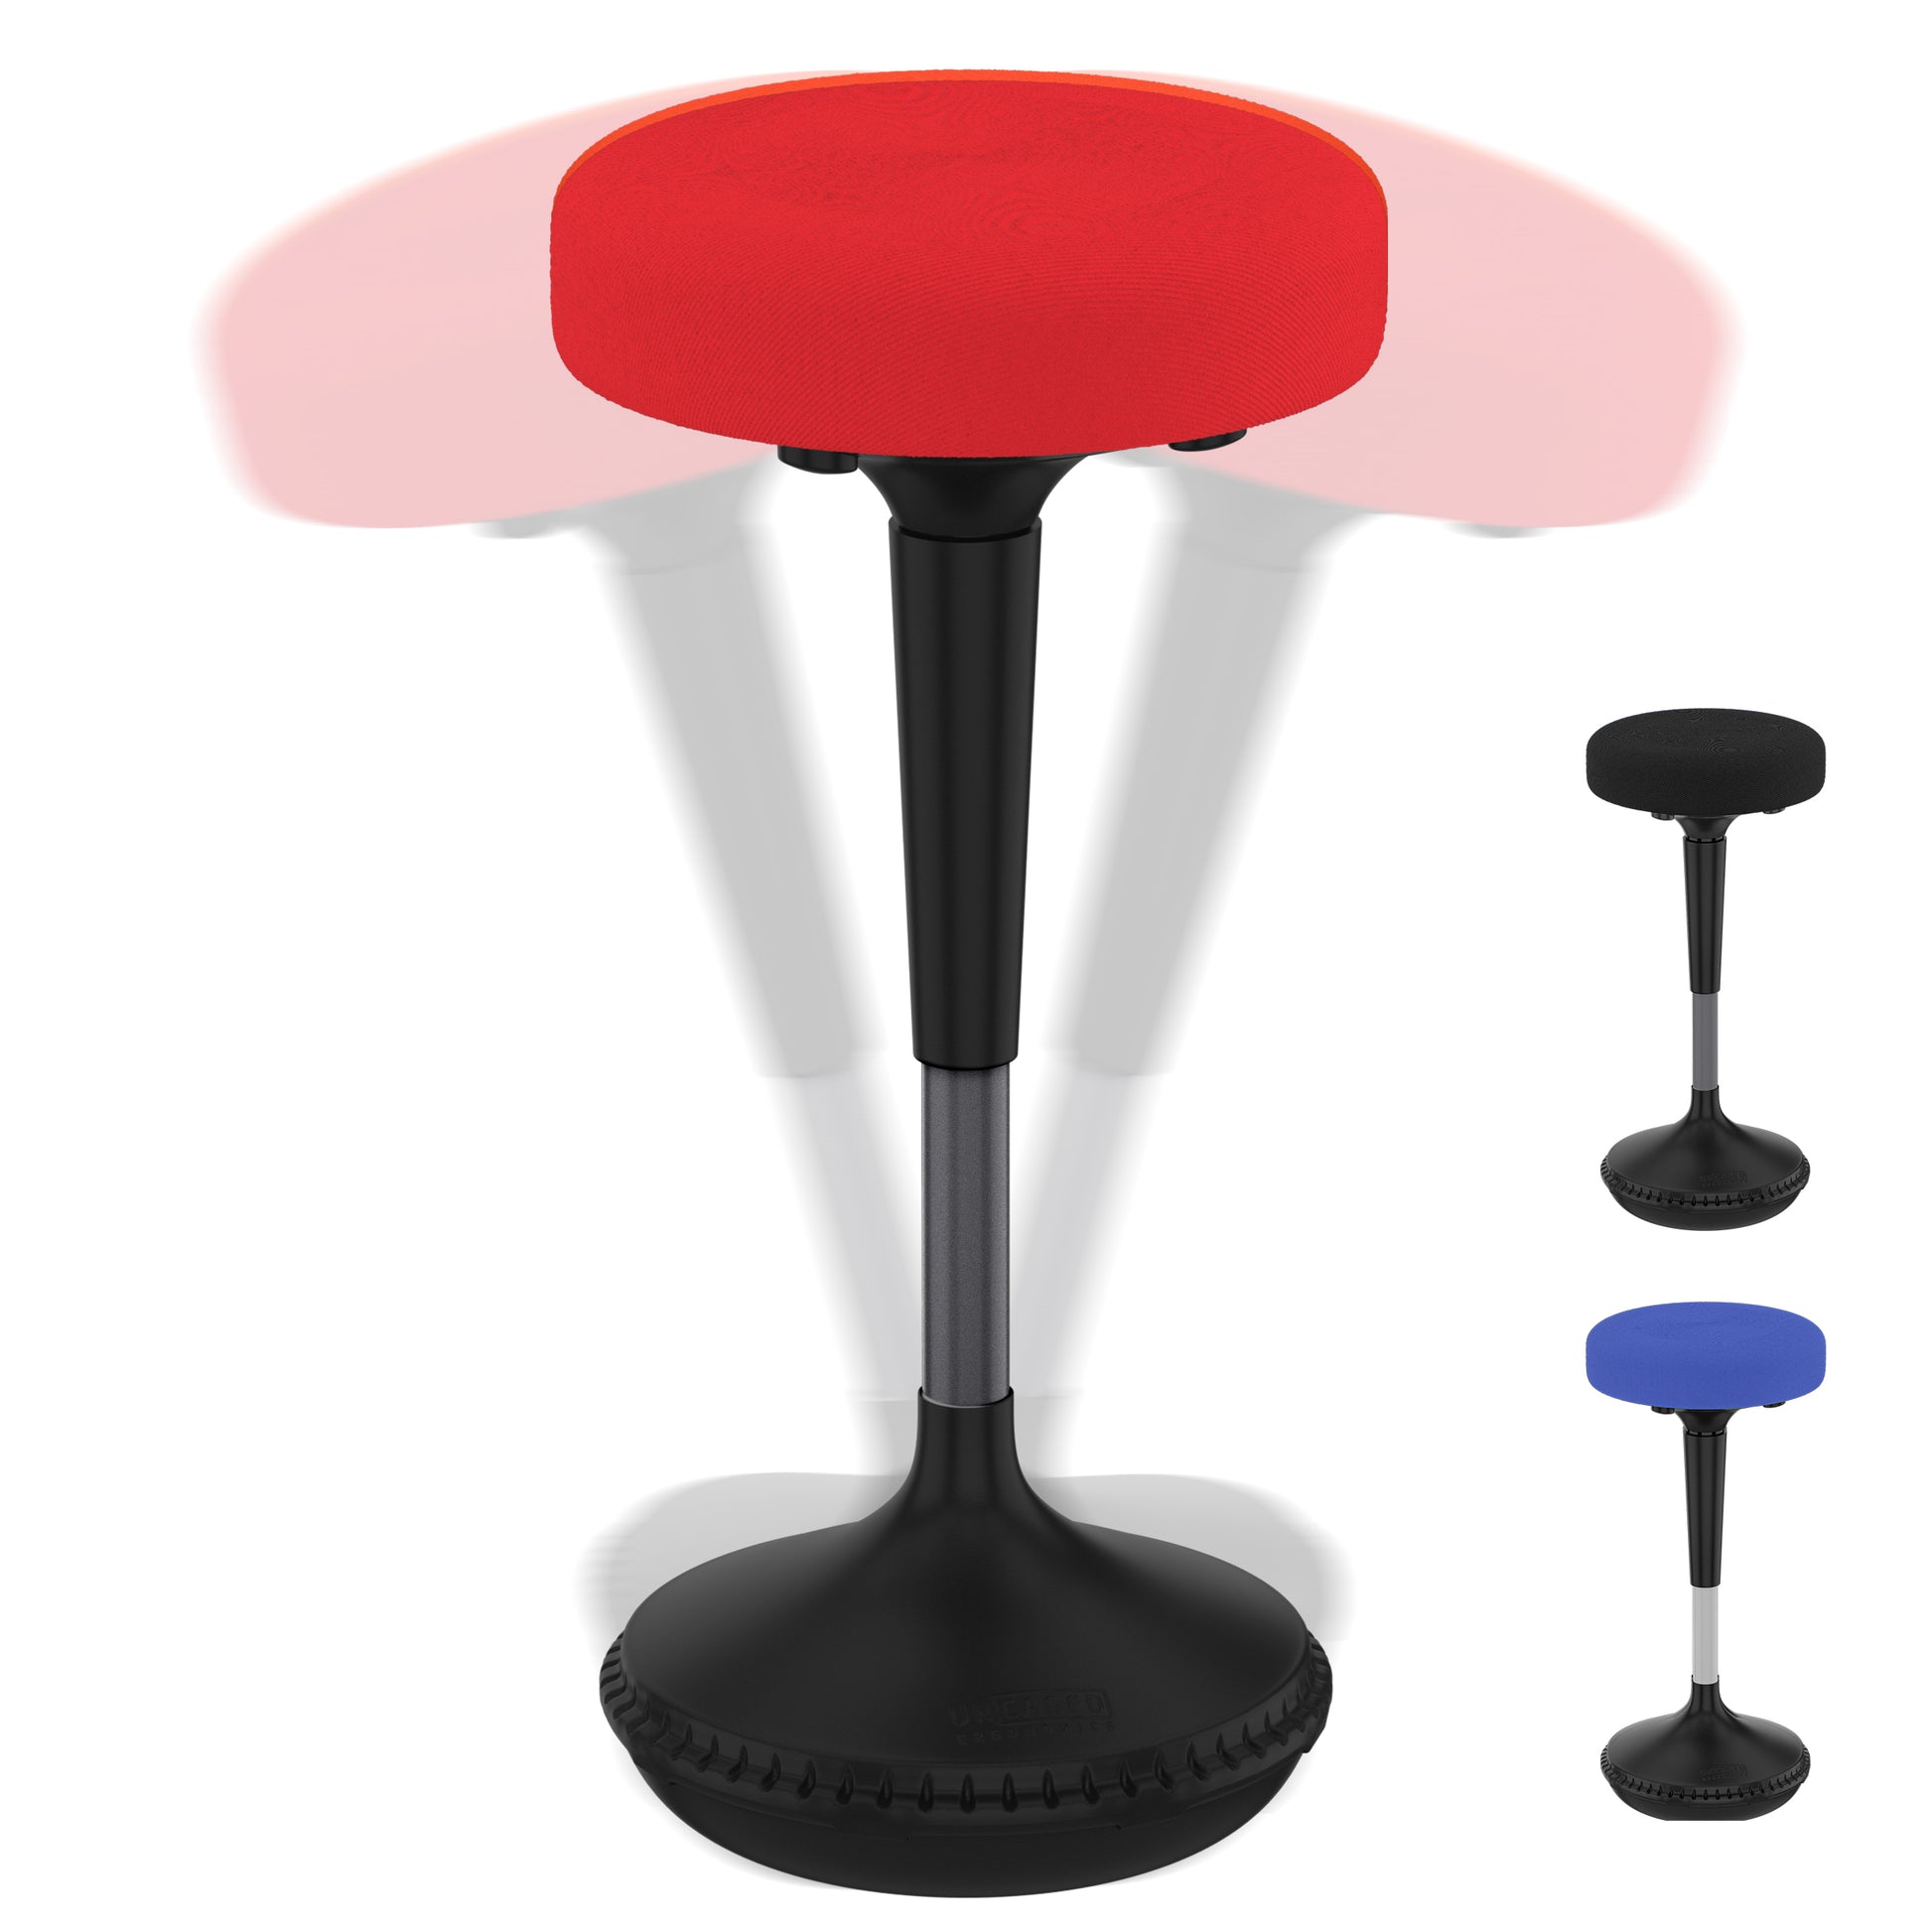 Einsatz WOBBLE STOOL best standing desk UncagedErgonomics sit stool tall stand ergonomic balance – chair